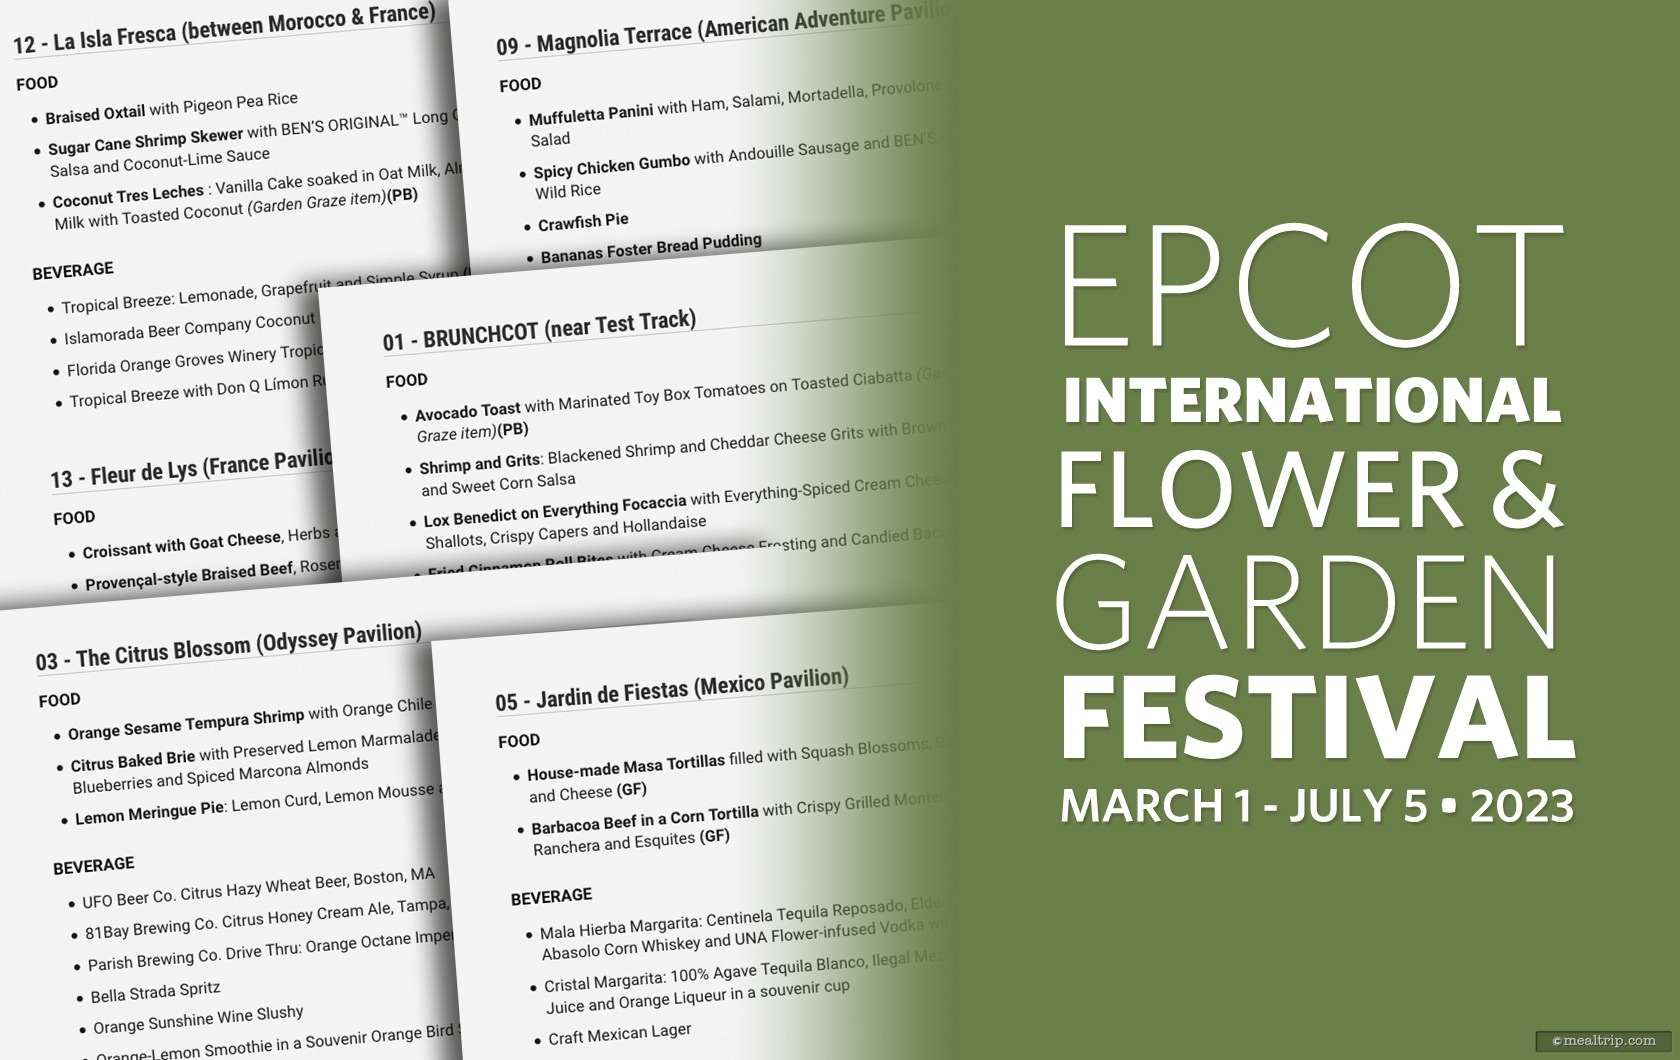 2023 Epcot International Flower & Garden Festival Food Booth Menu Items